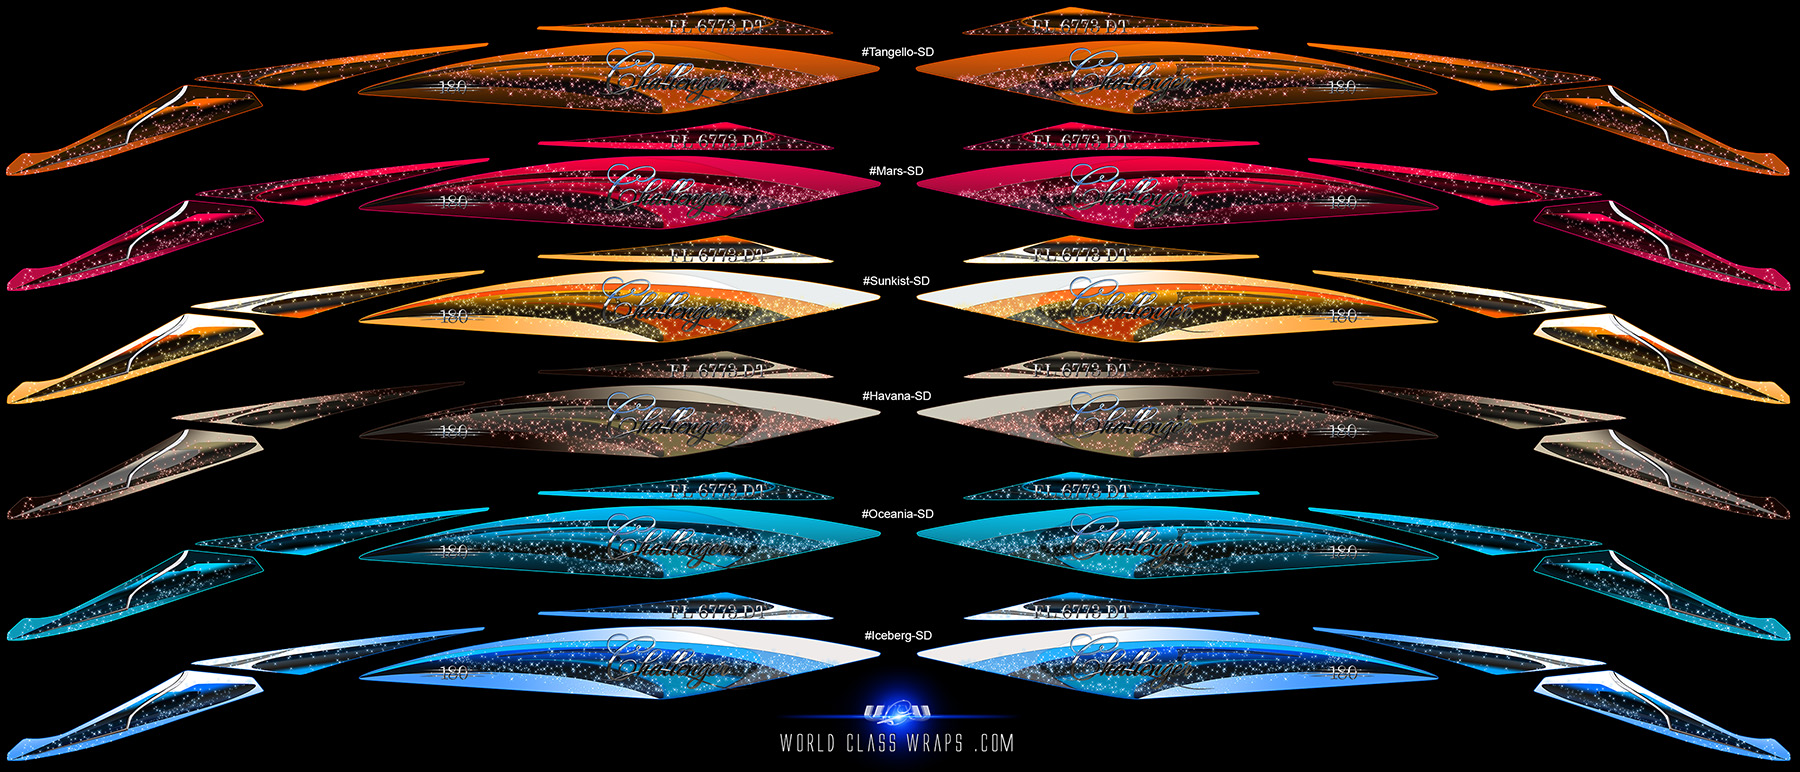 seadoo challenger 180 boat graphics image